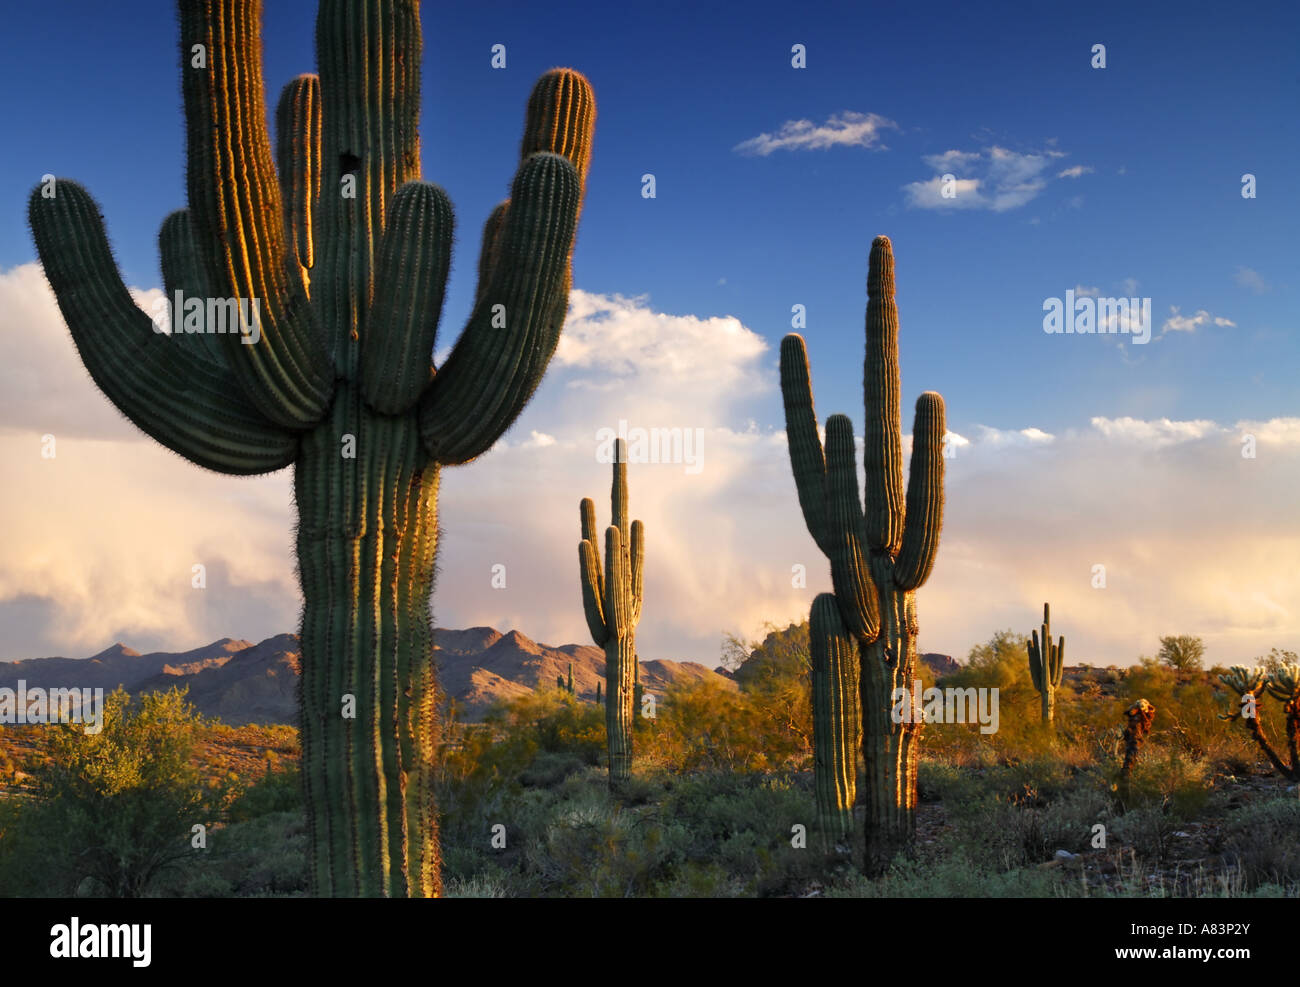 Saguaro Cactus High Resolution Stock Photography And Images Alamy